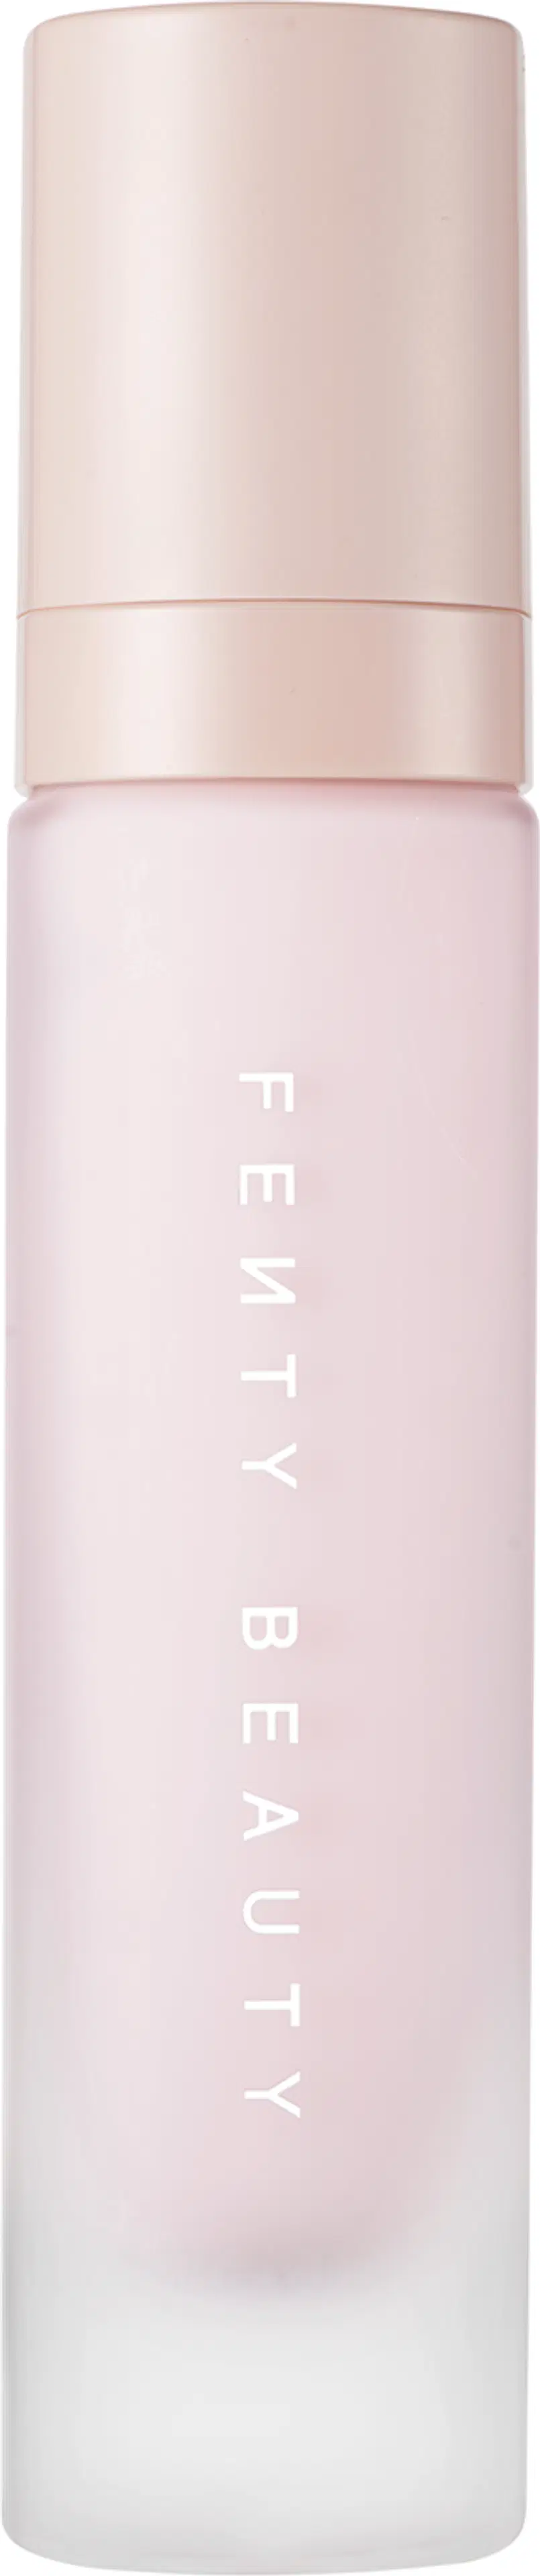 Fenty Beauty Pro Filt'r Hydrating Primer meikinpohjustaja 32 ml